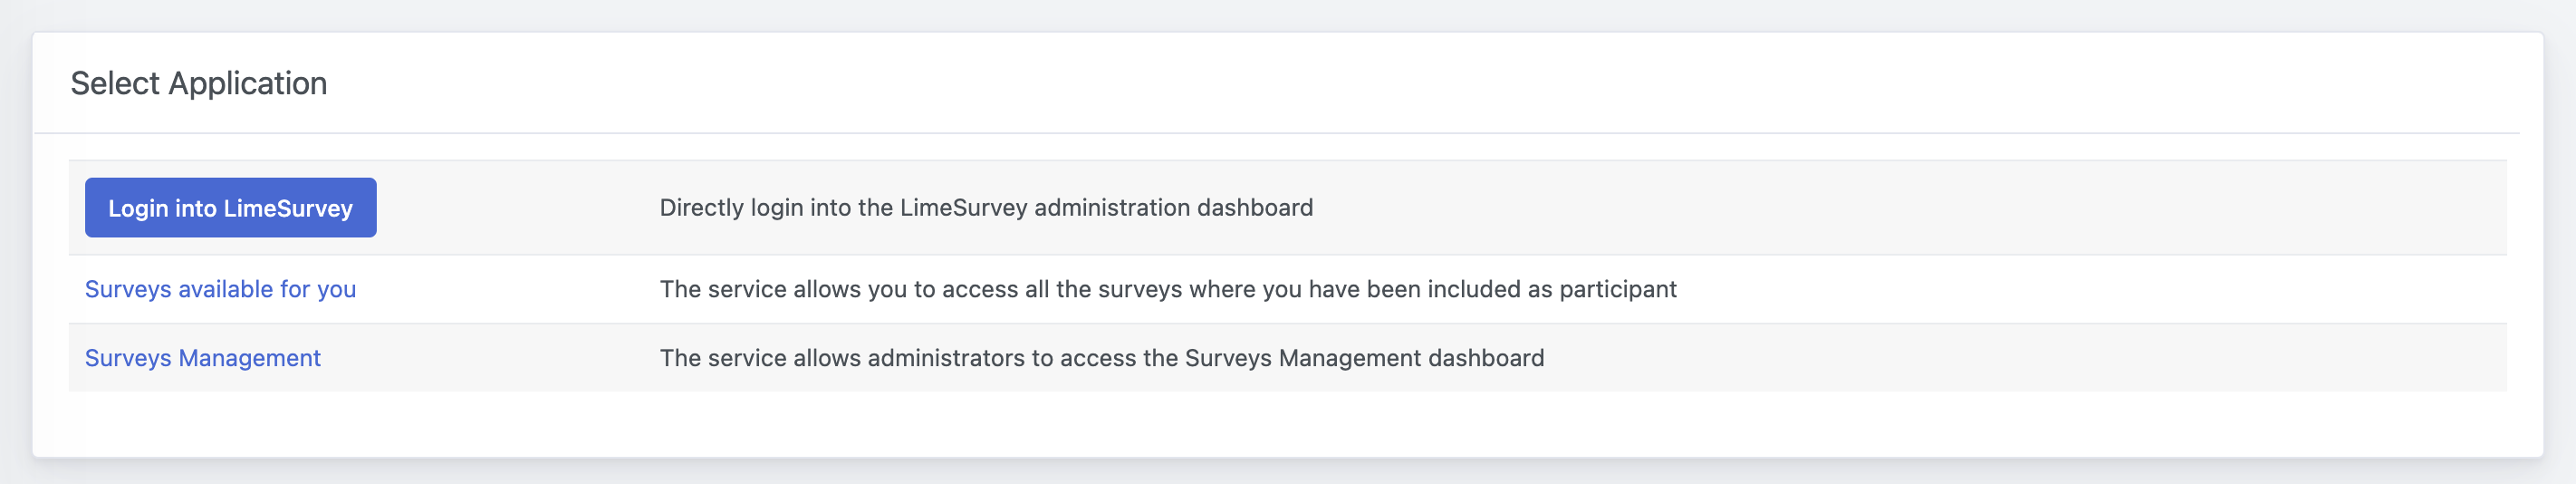 Surveys - Login into Survey Administration Dashboard